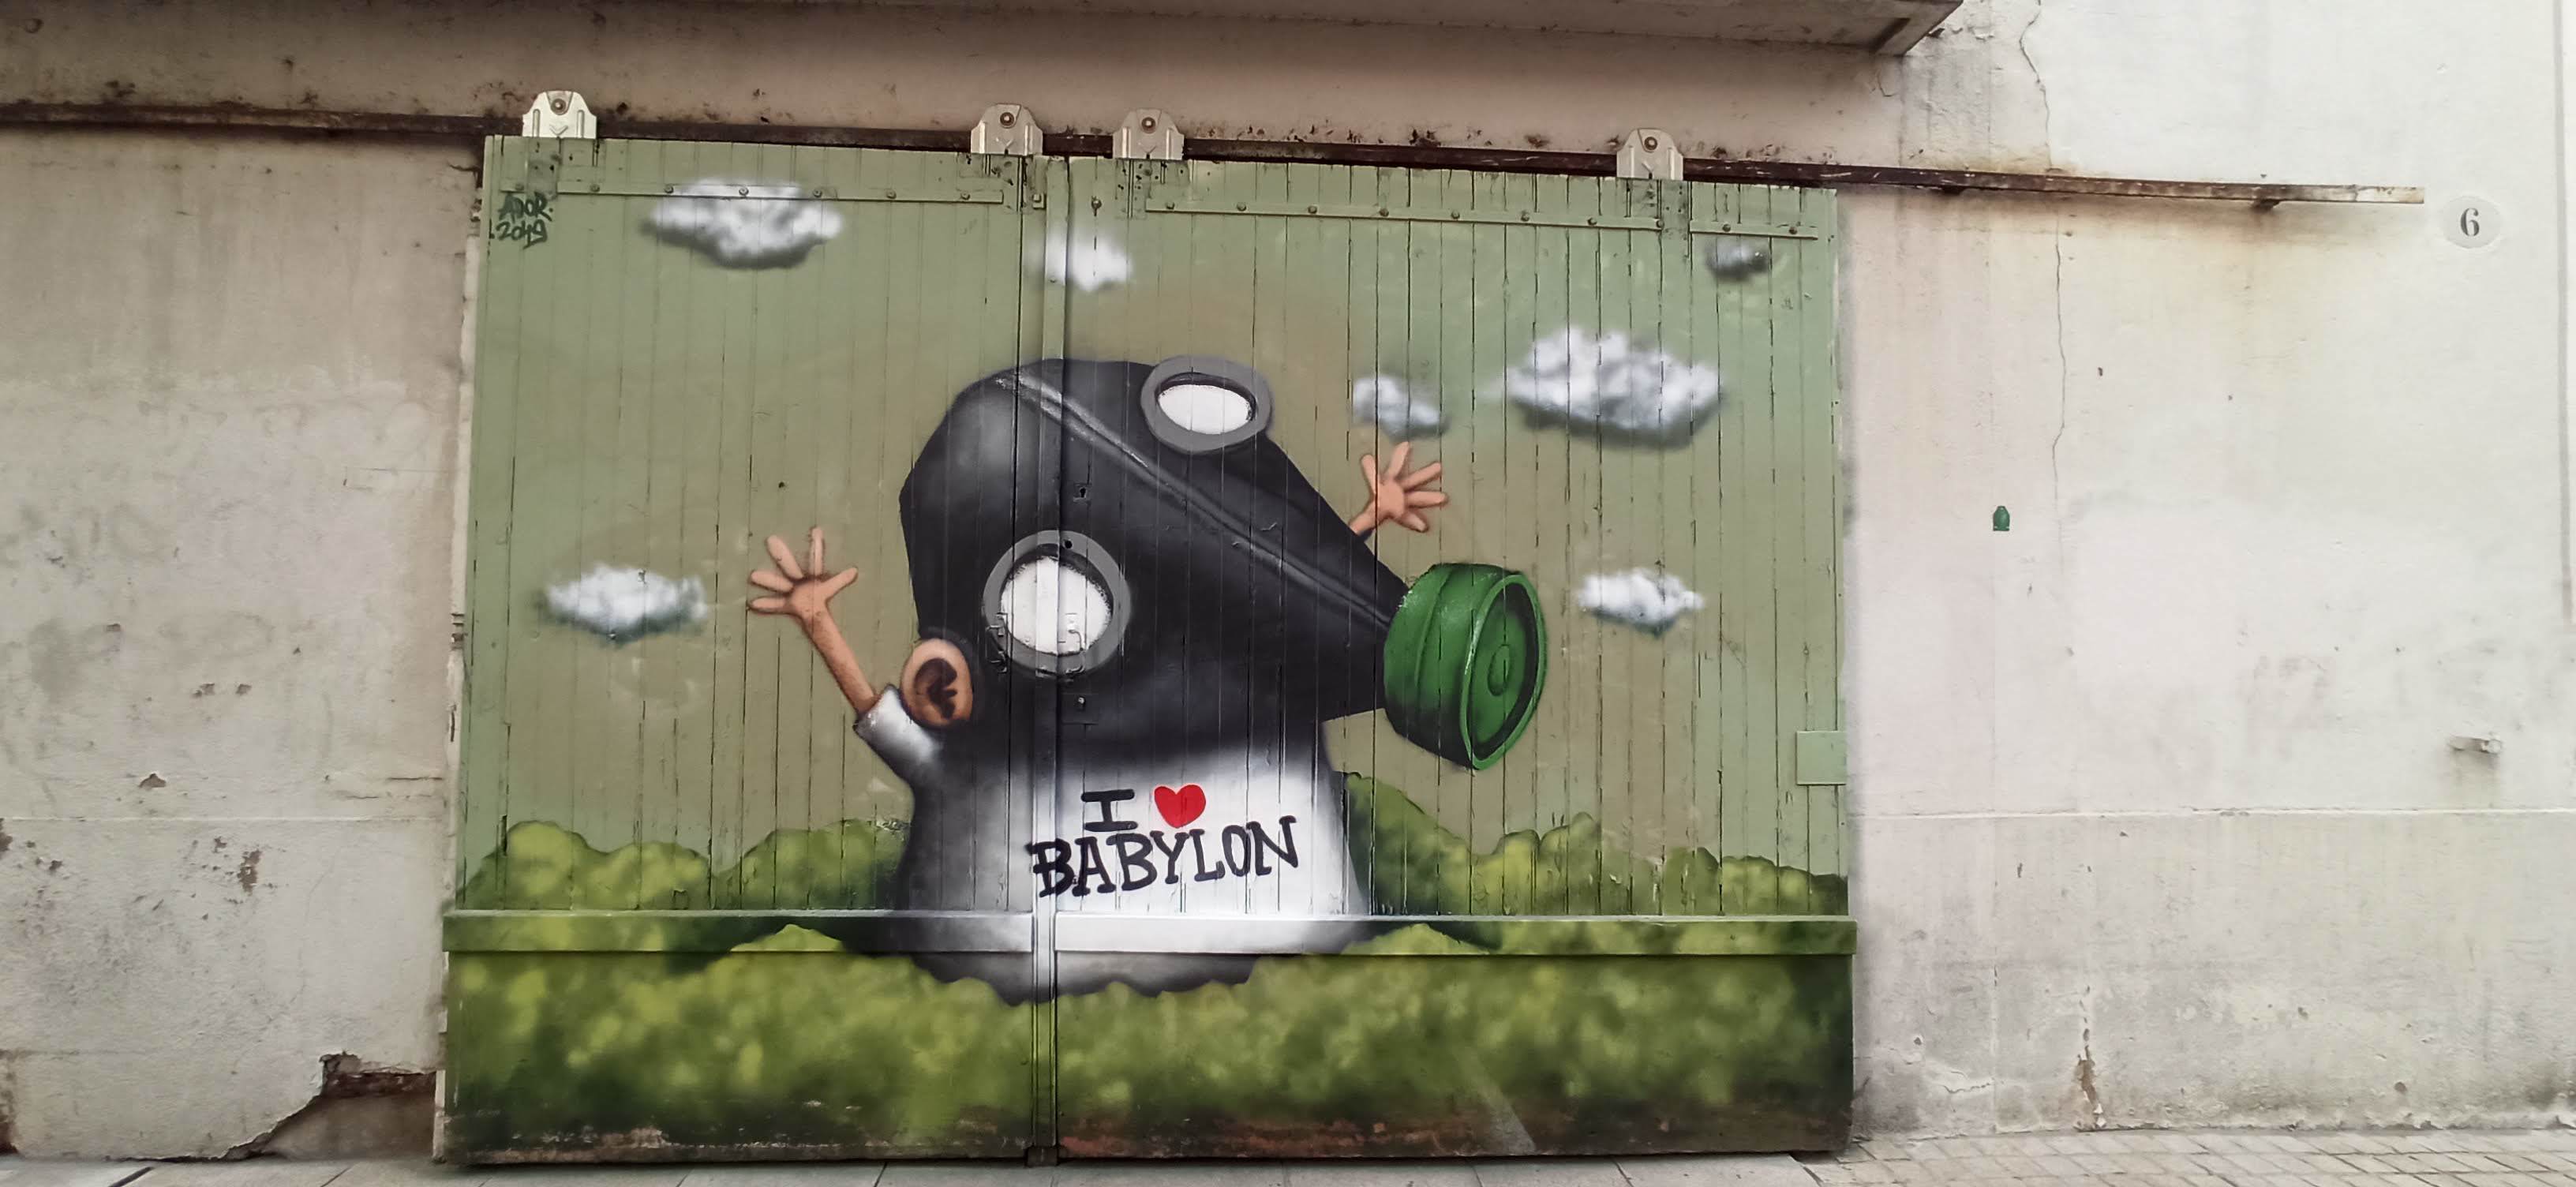 Graffiti 5040 I love babylon by the artist Ador captured by Rabot in Nantes France